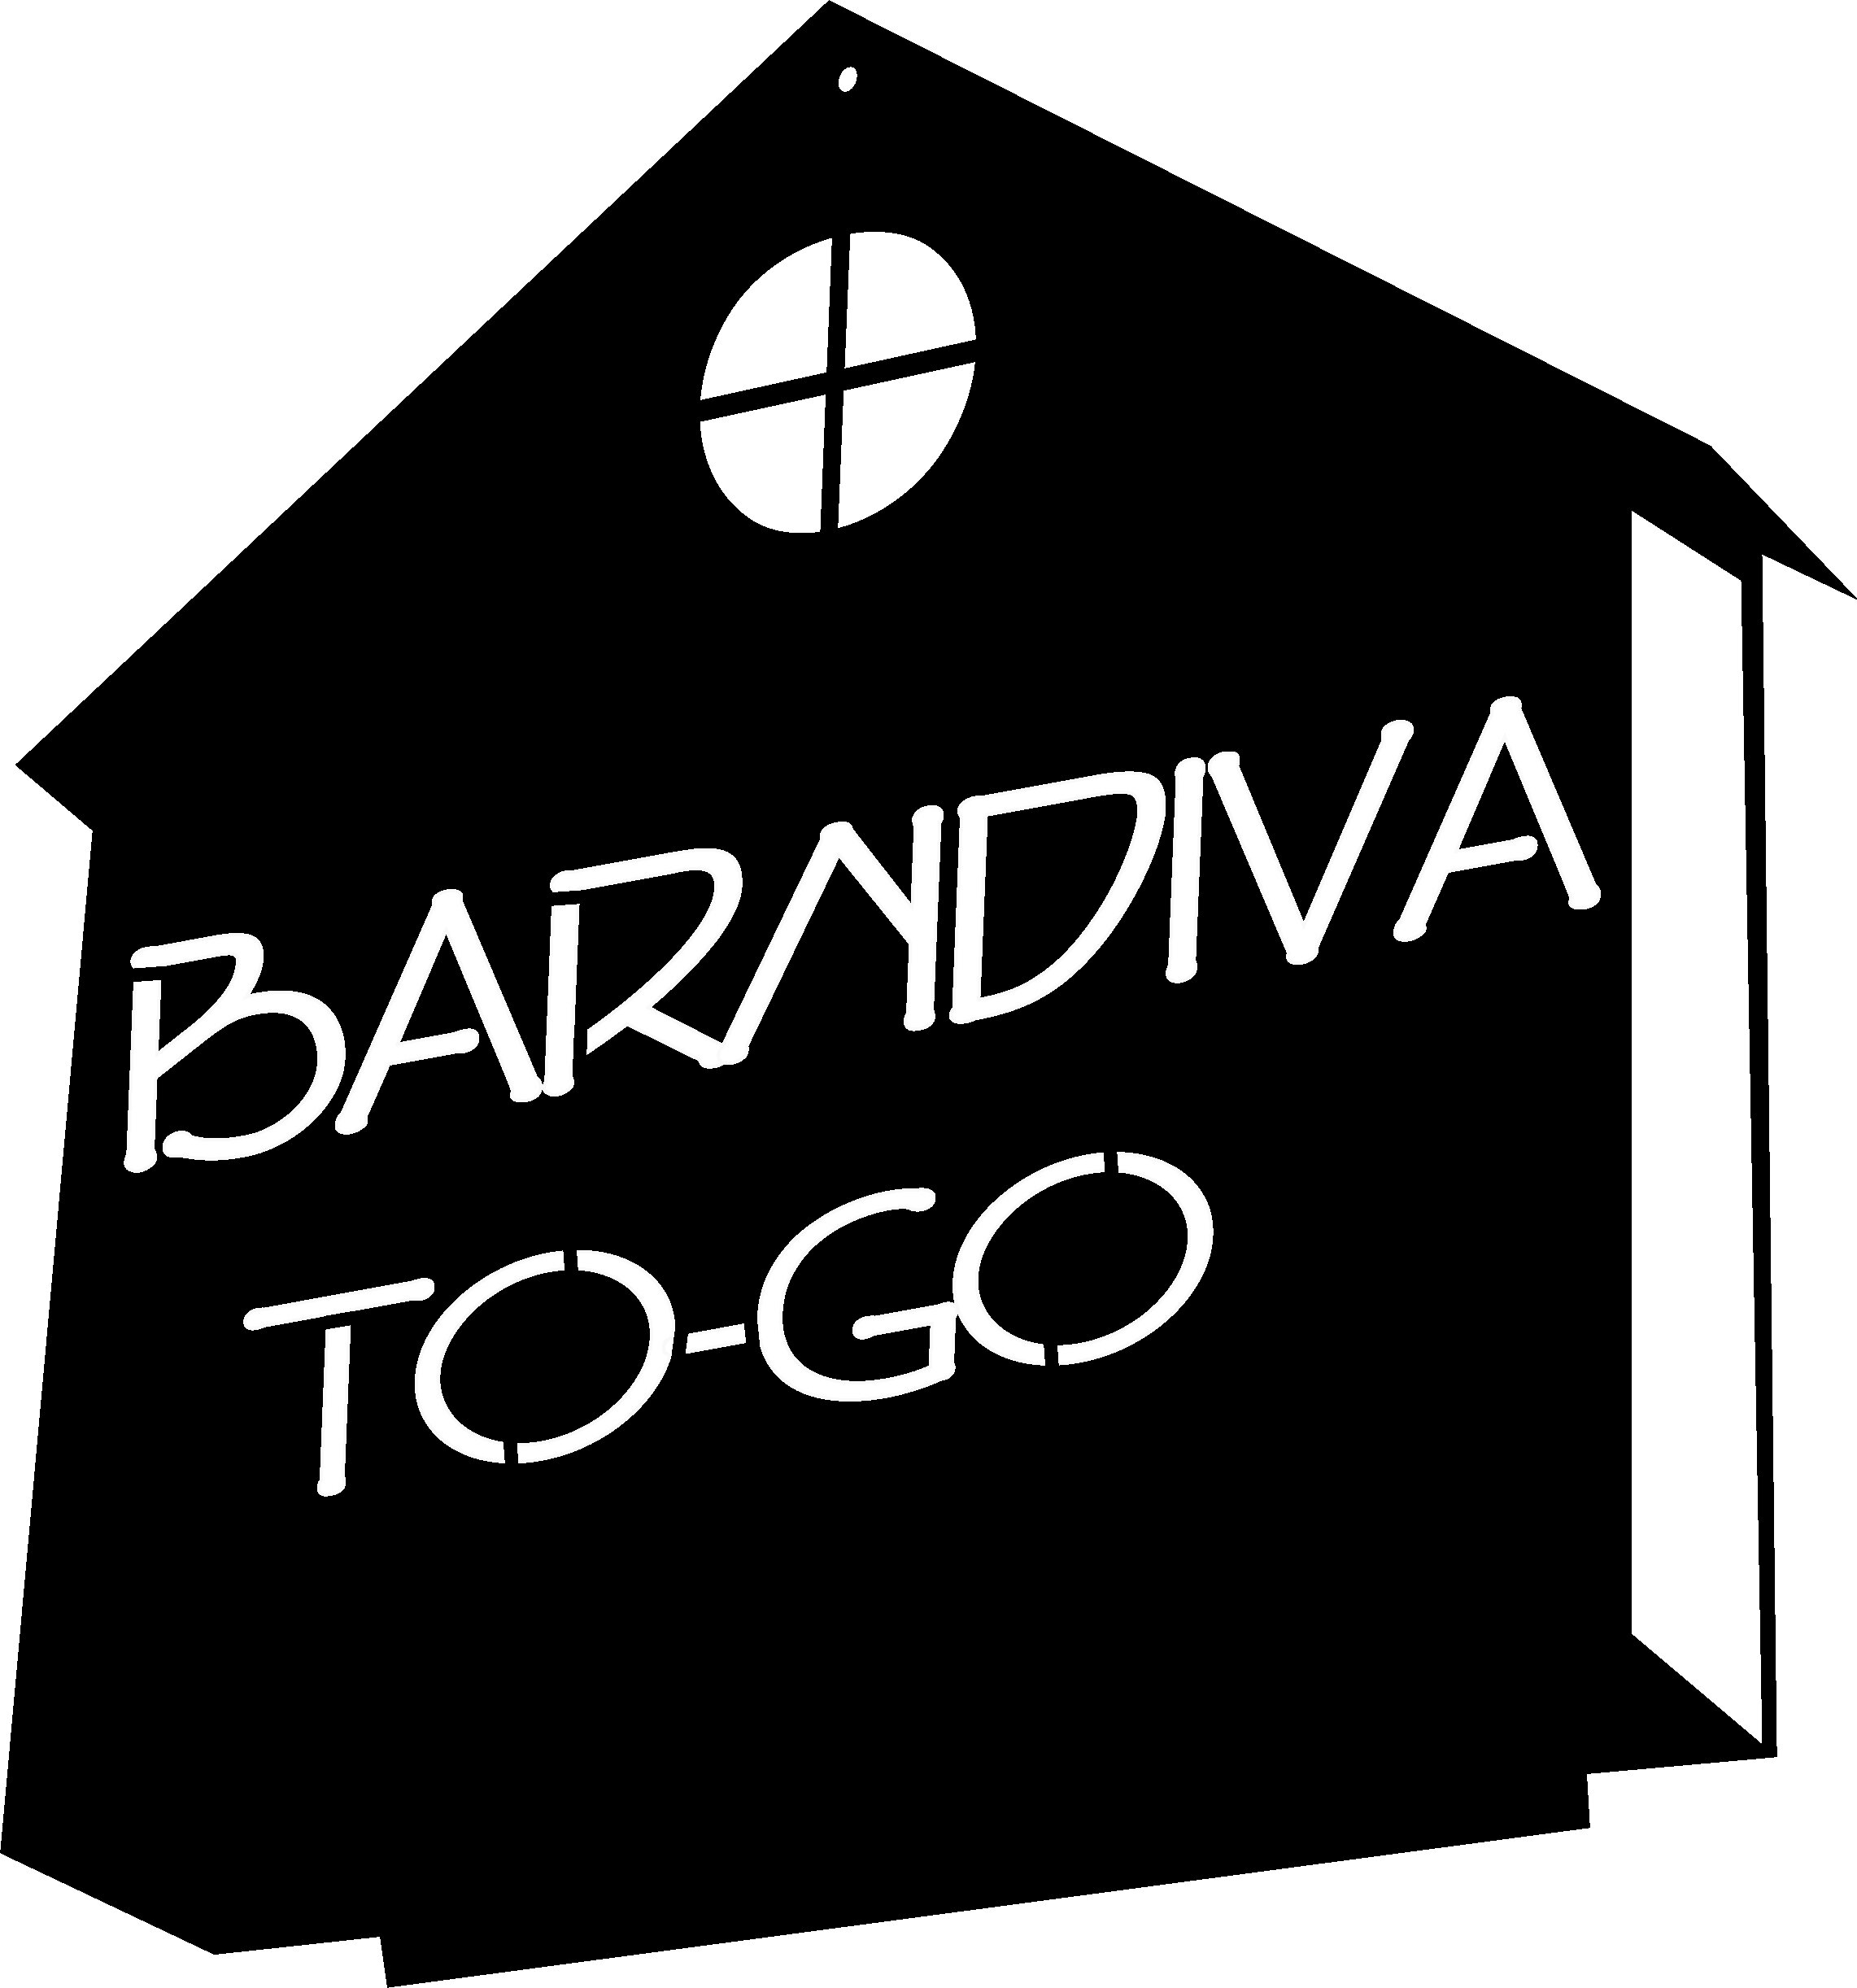 Barndiva TOGO logo LARGE.jpg